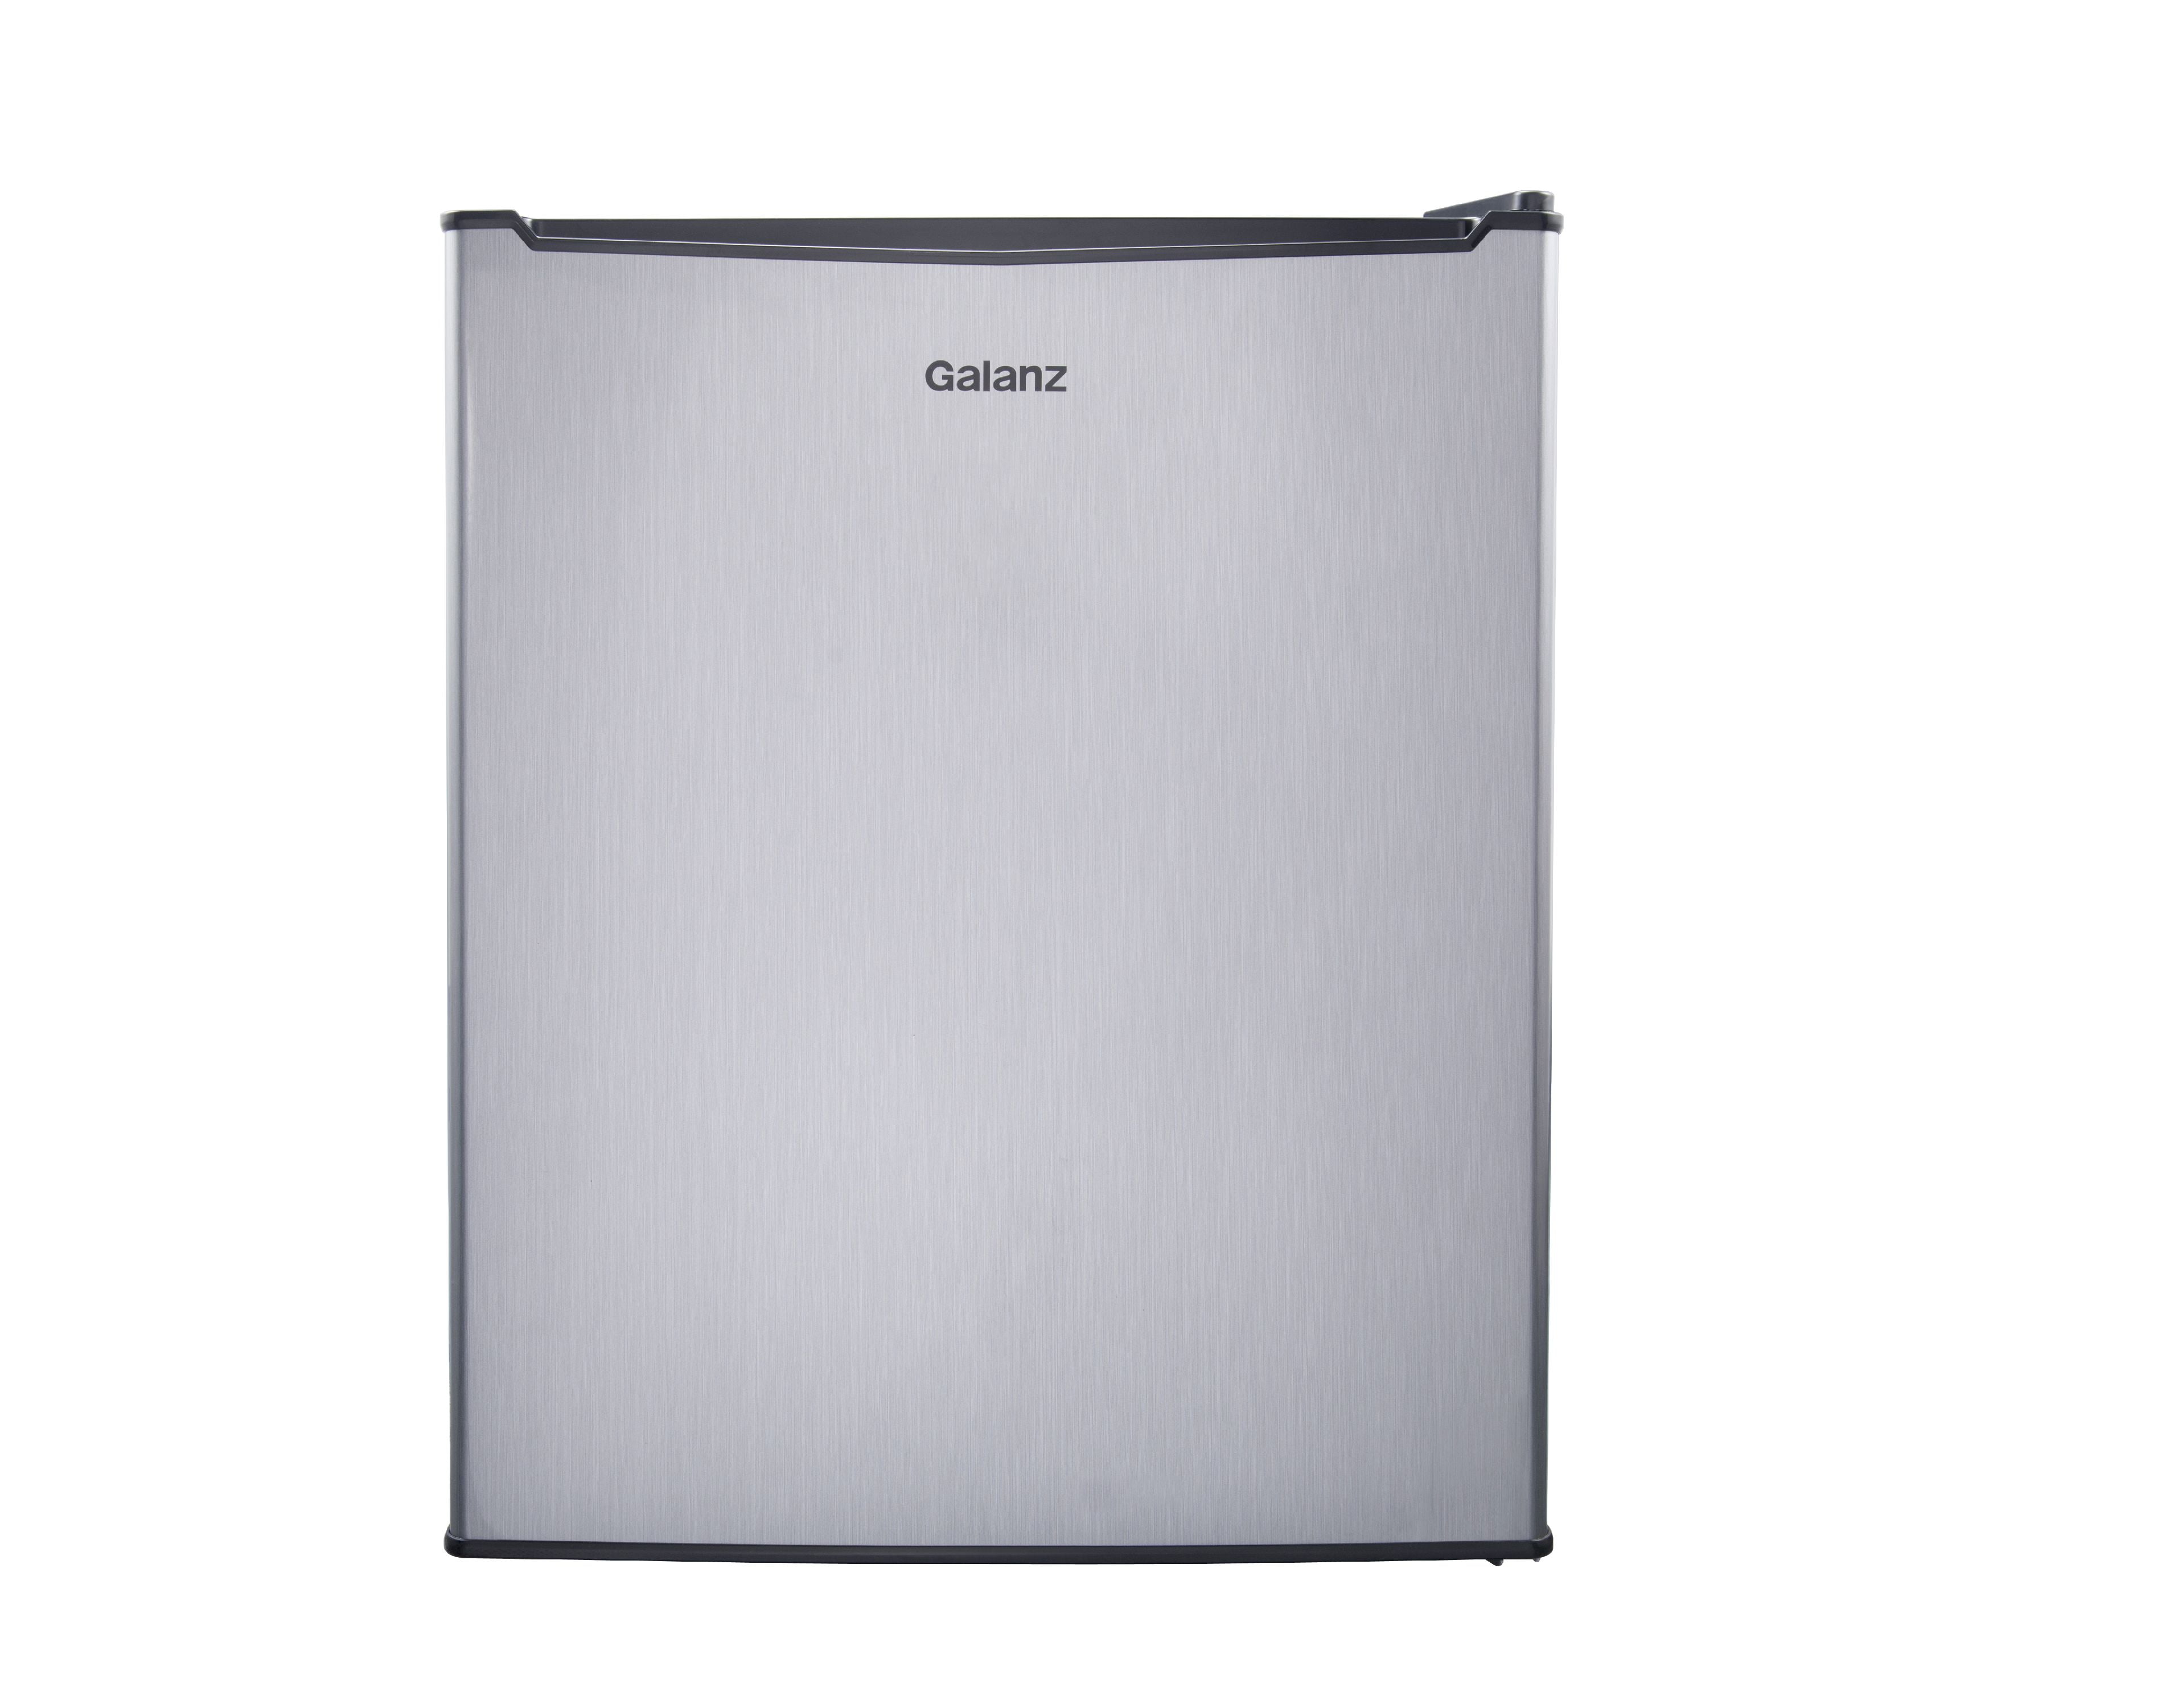 Galanz Small Compact 3.3cu ft Single-Door Mini Refrigerator W/ Freezer Stainless 